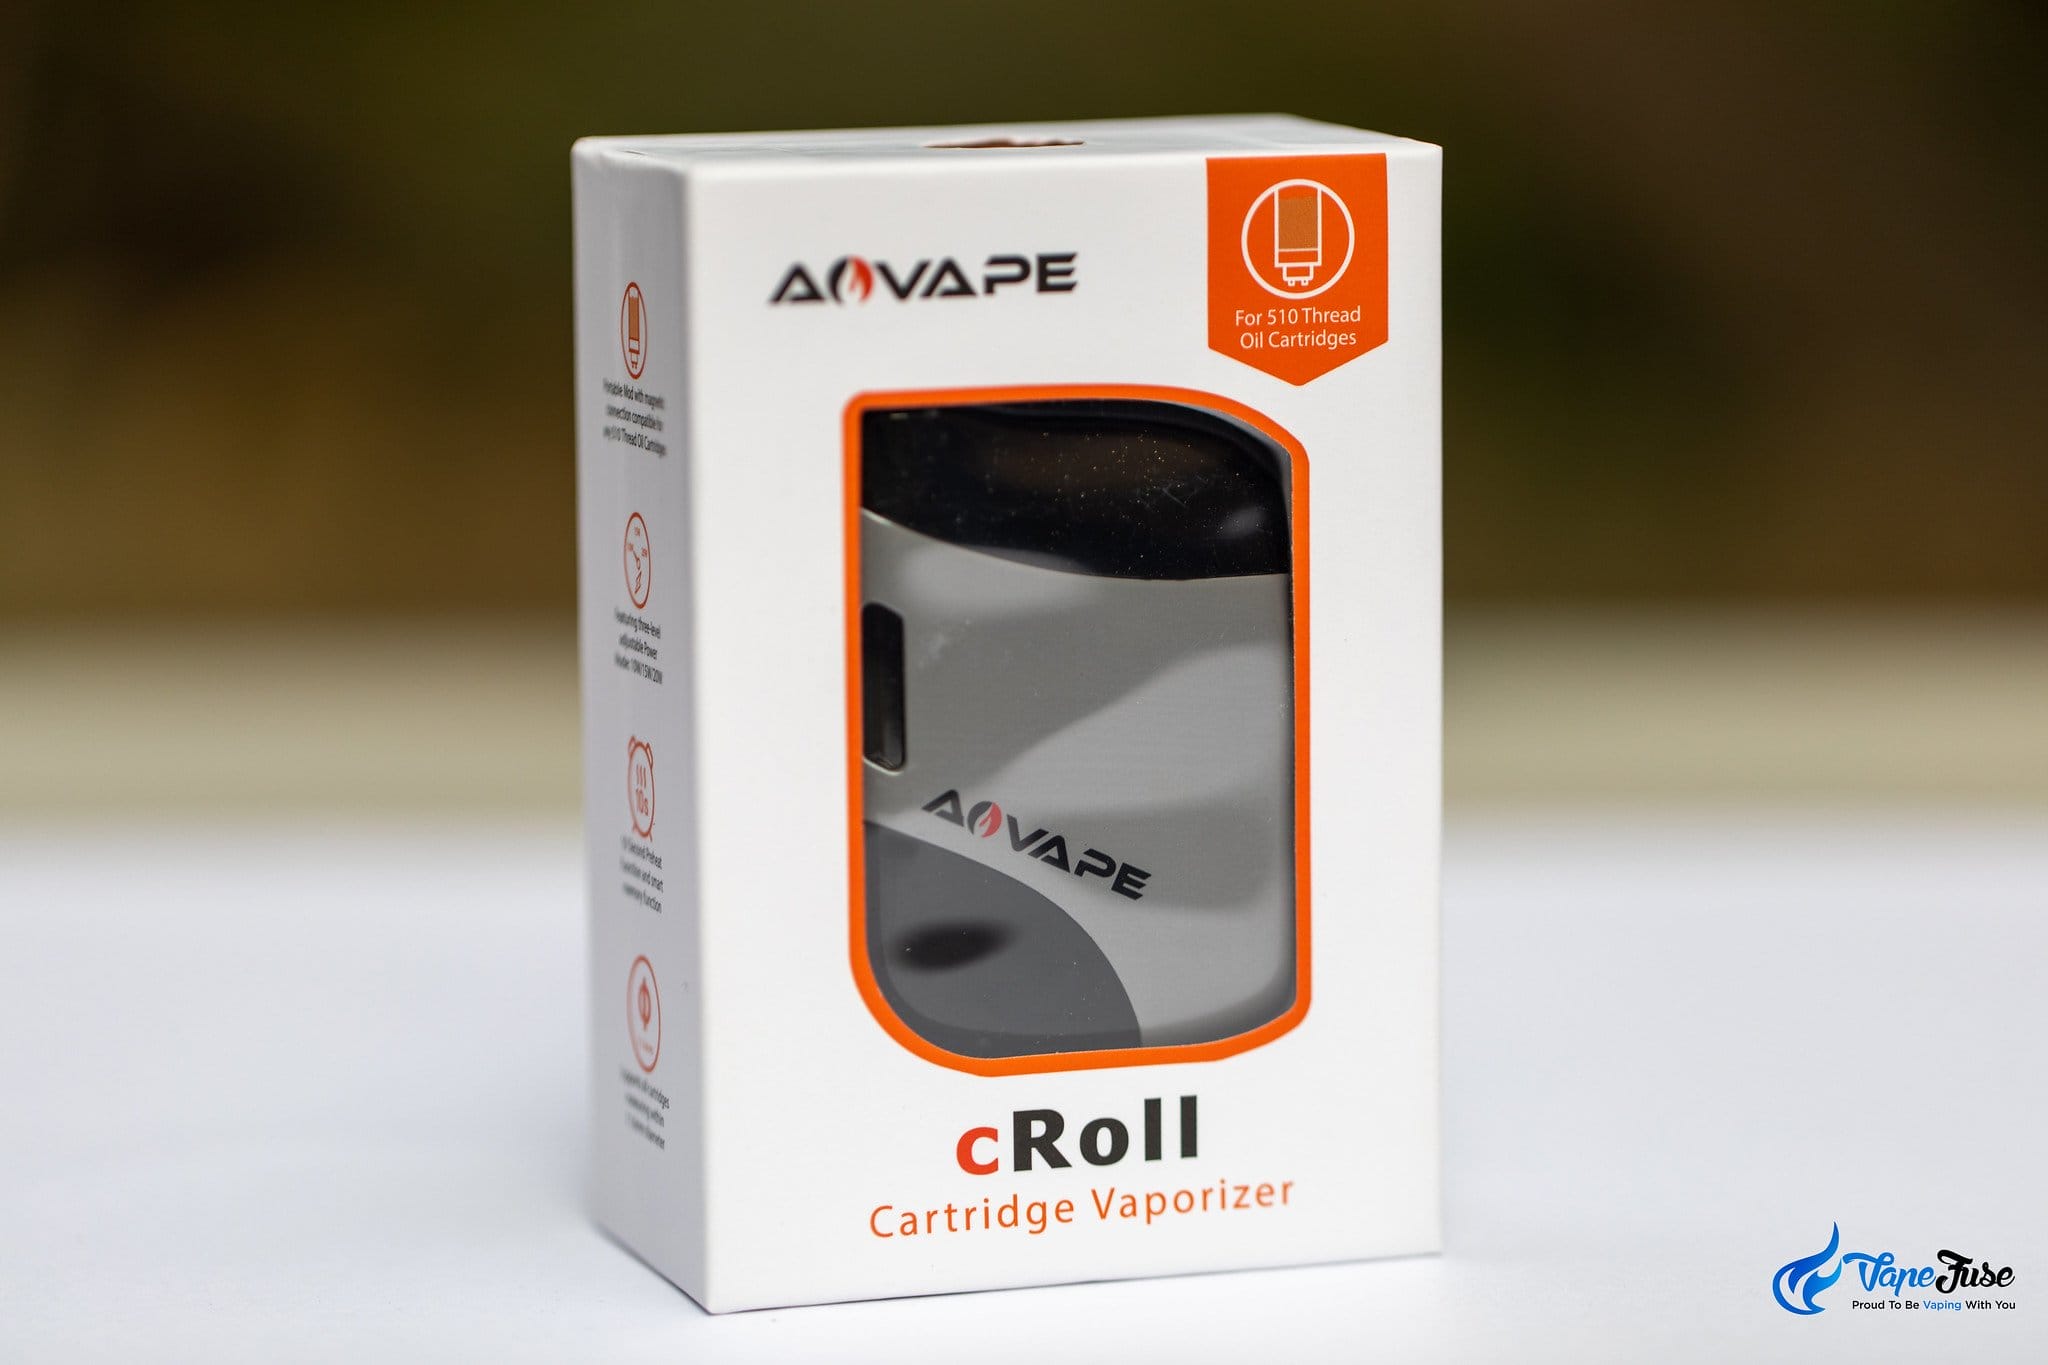 Aovape cRoll Oil Vaporizer in packaging